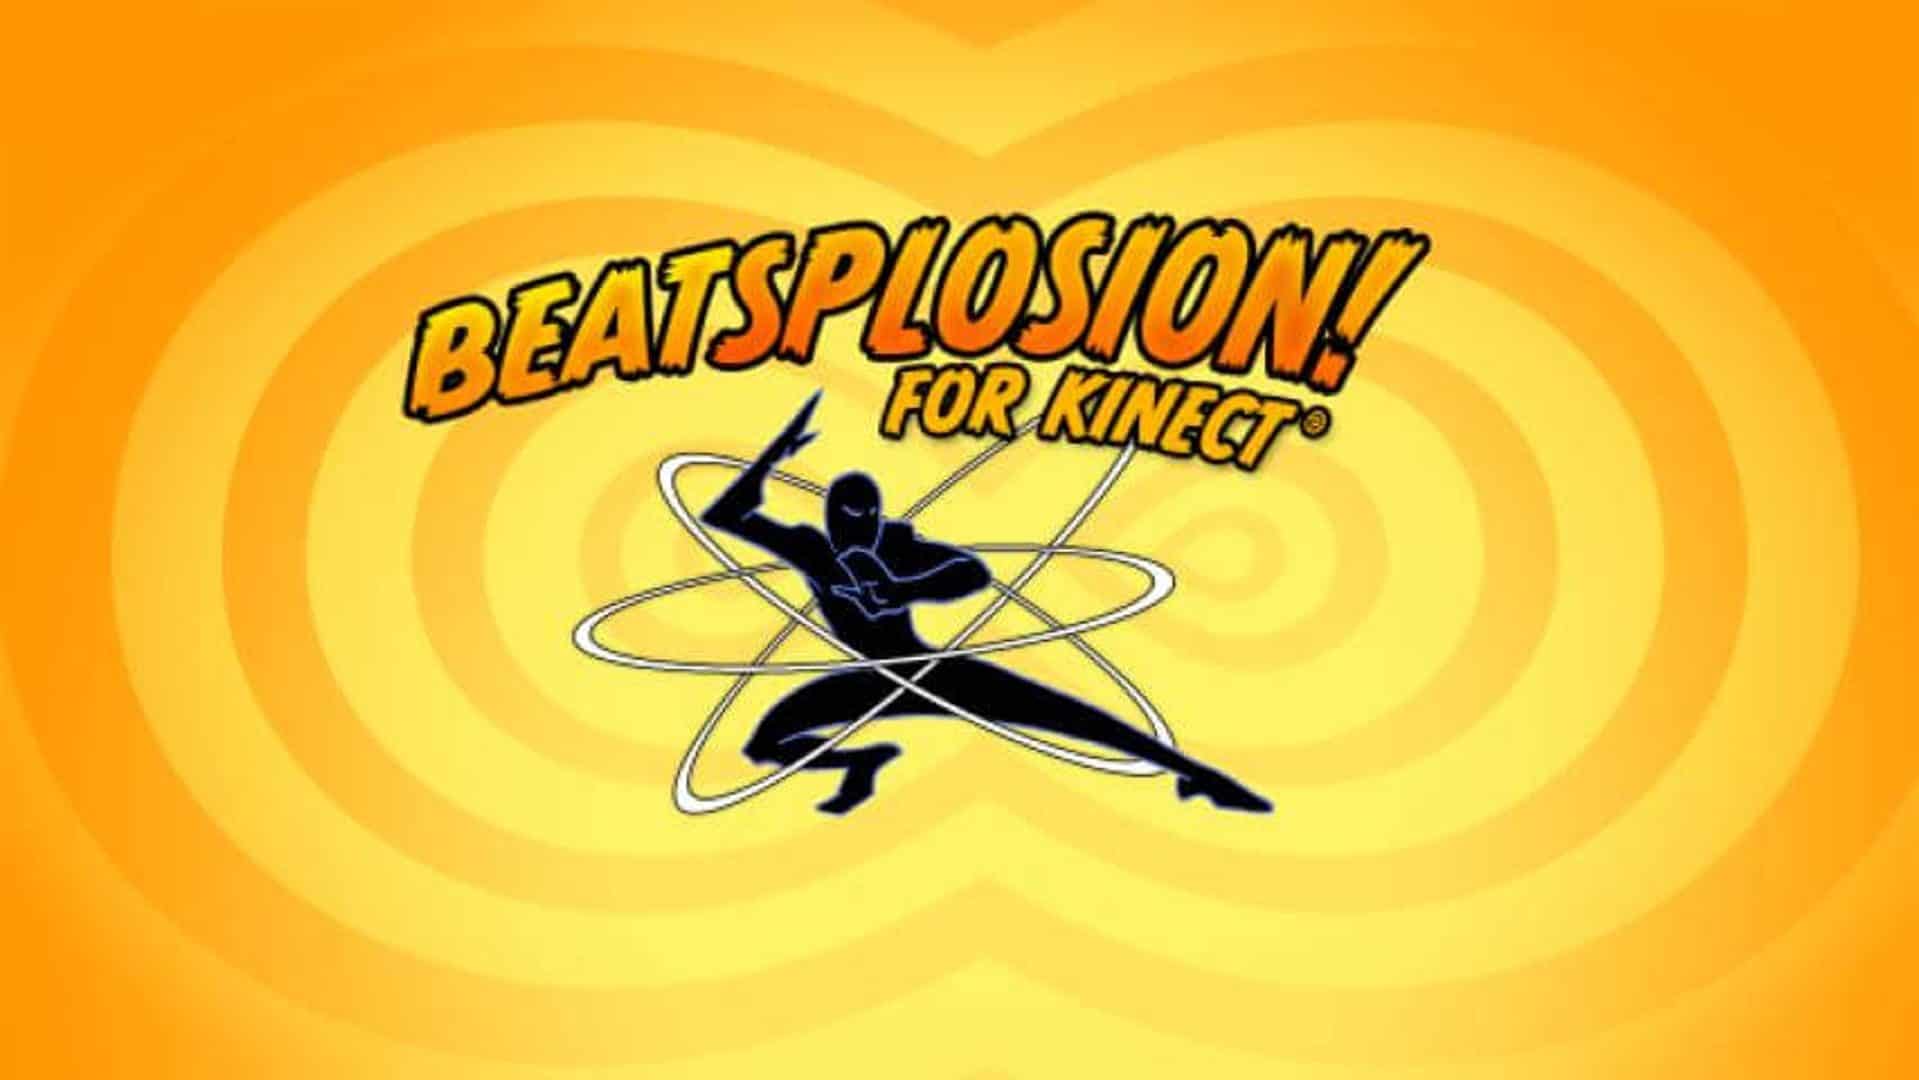 Beatsplosion! for kinect